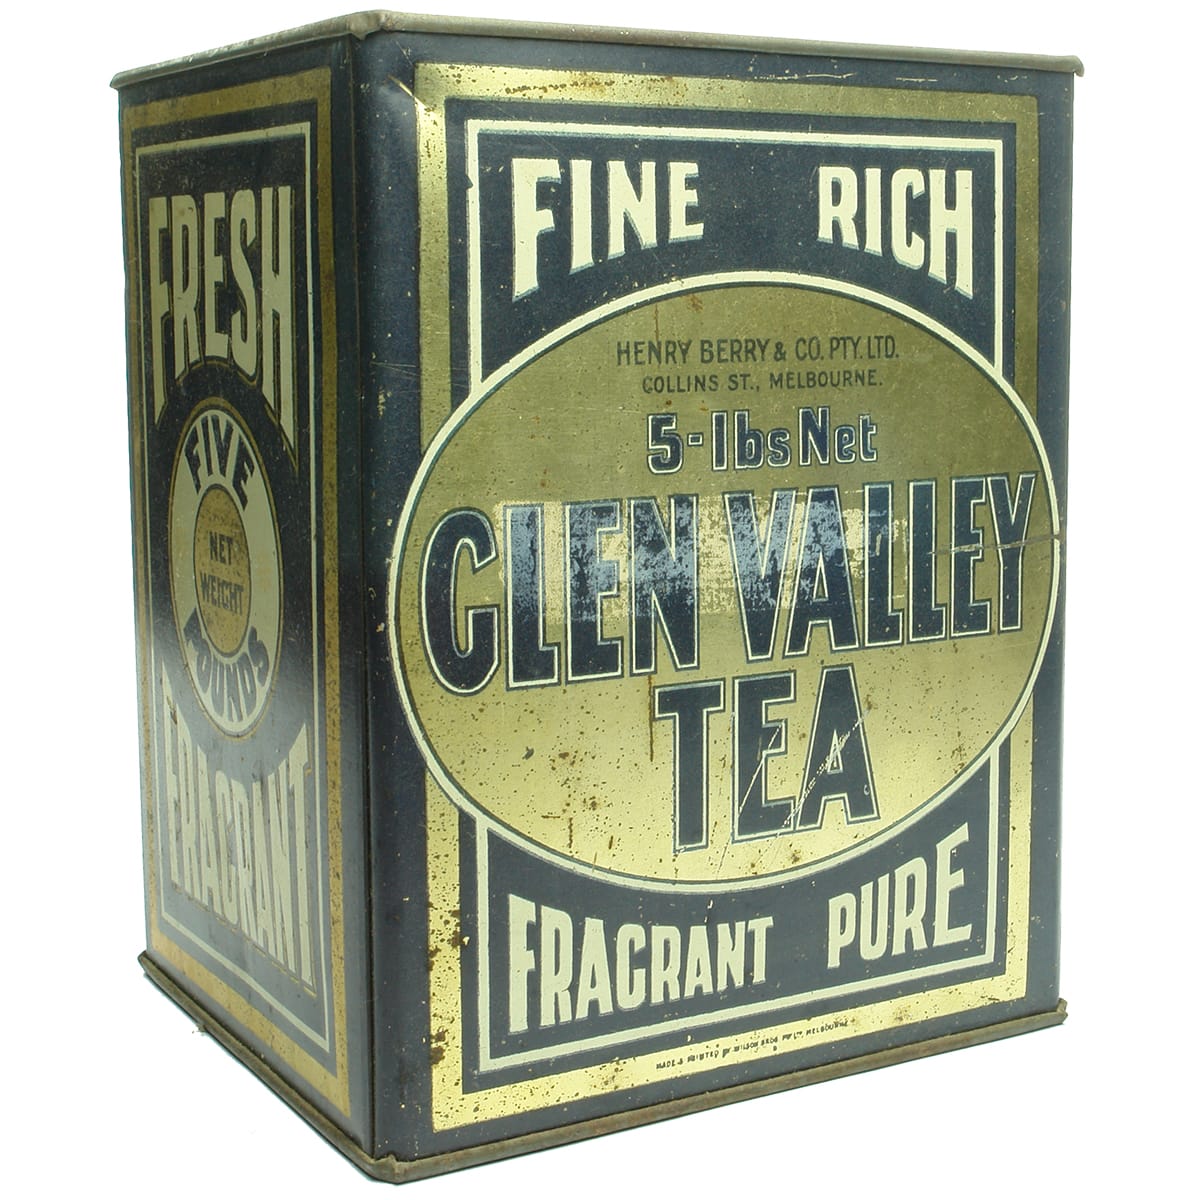 Tin. Glen Valley Tea, Henry Berry, Melbourne. 5 Pounds.